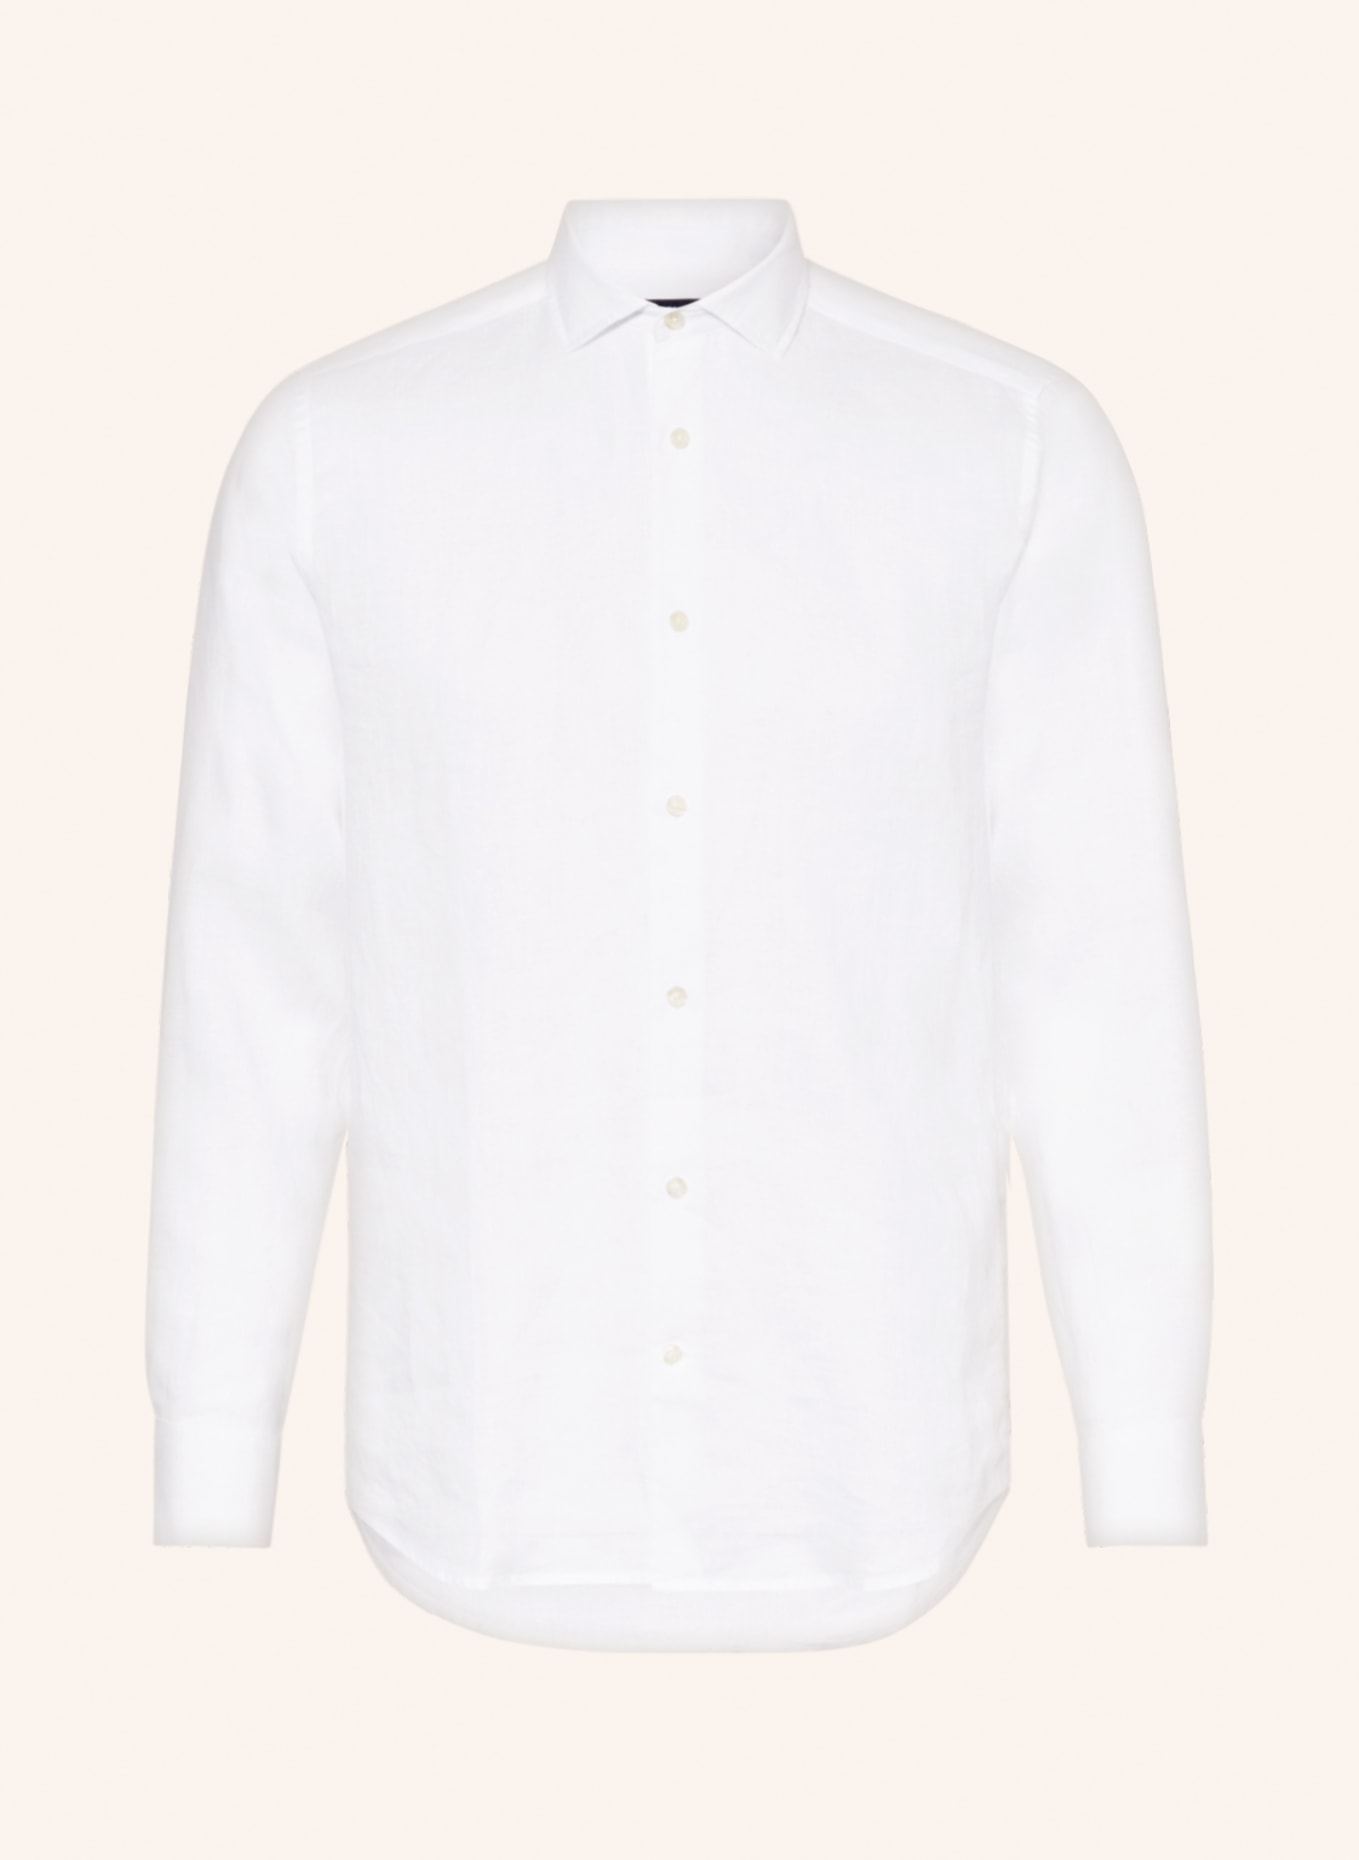 FRESCOBOL CARIOCA Leinenhemd ANTONIO Regular Fit, Farbe: WEISS (Bild 1)